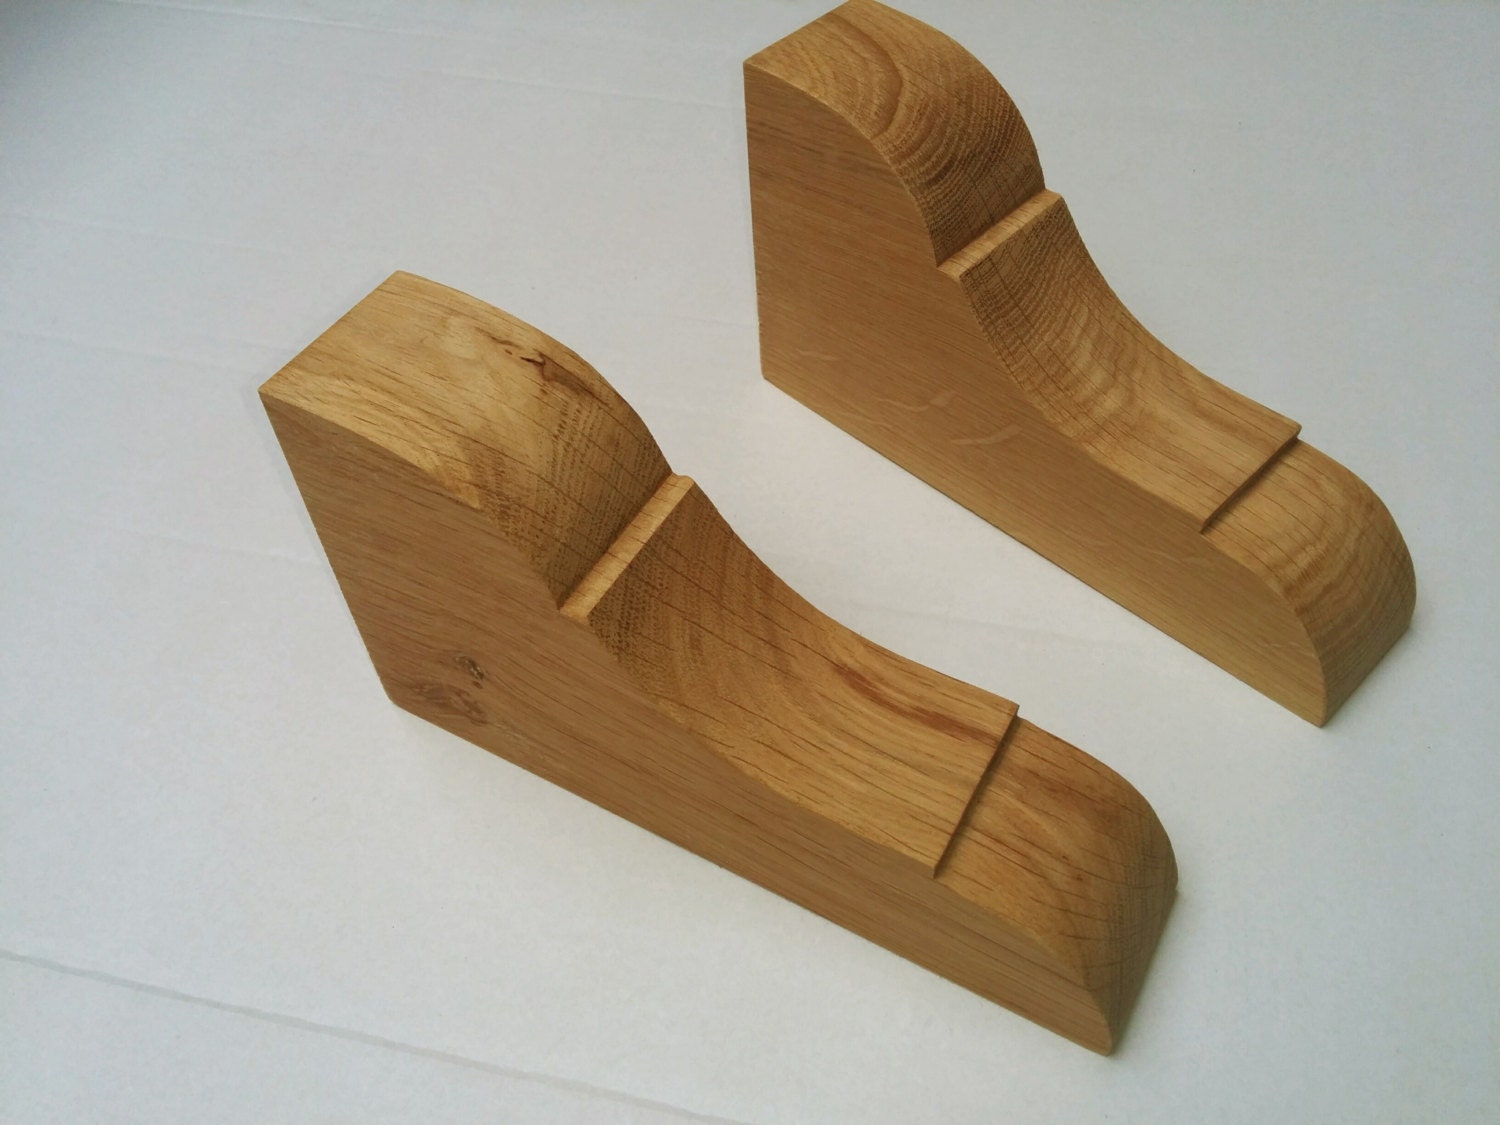 oak corbel pair for decorative or shelf bracket support.